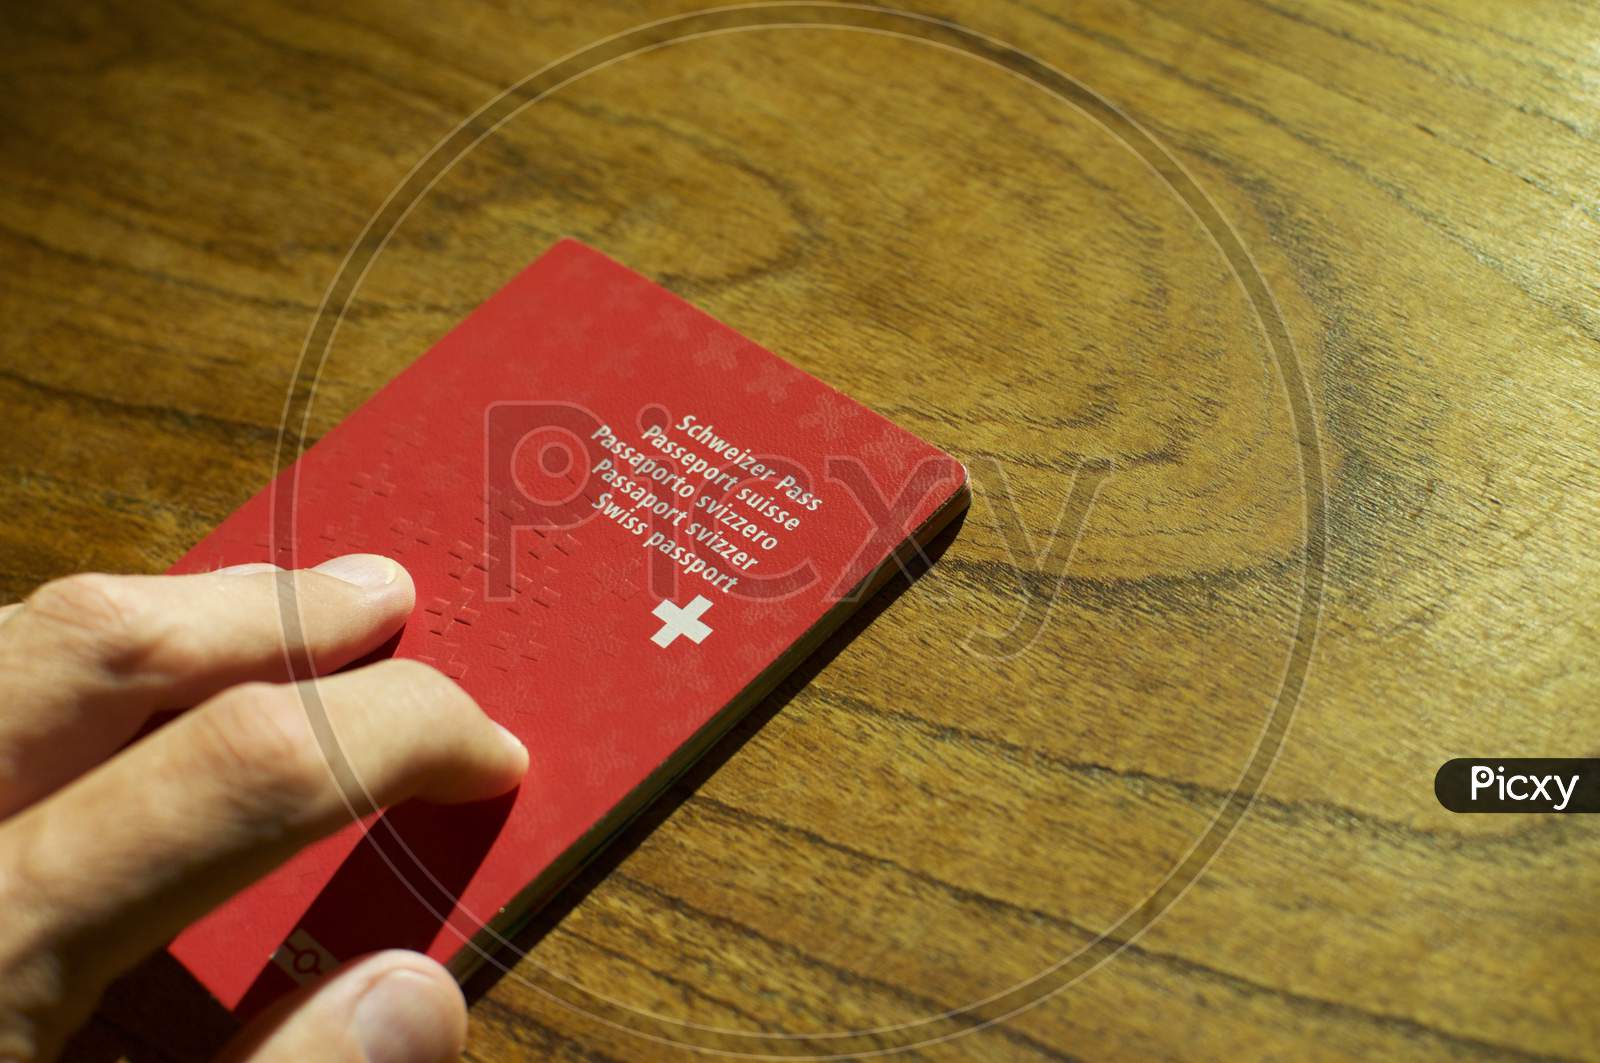 Single Swiss Passport On A Wooden Table